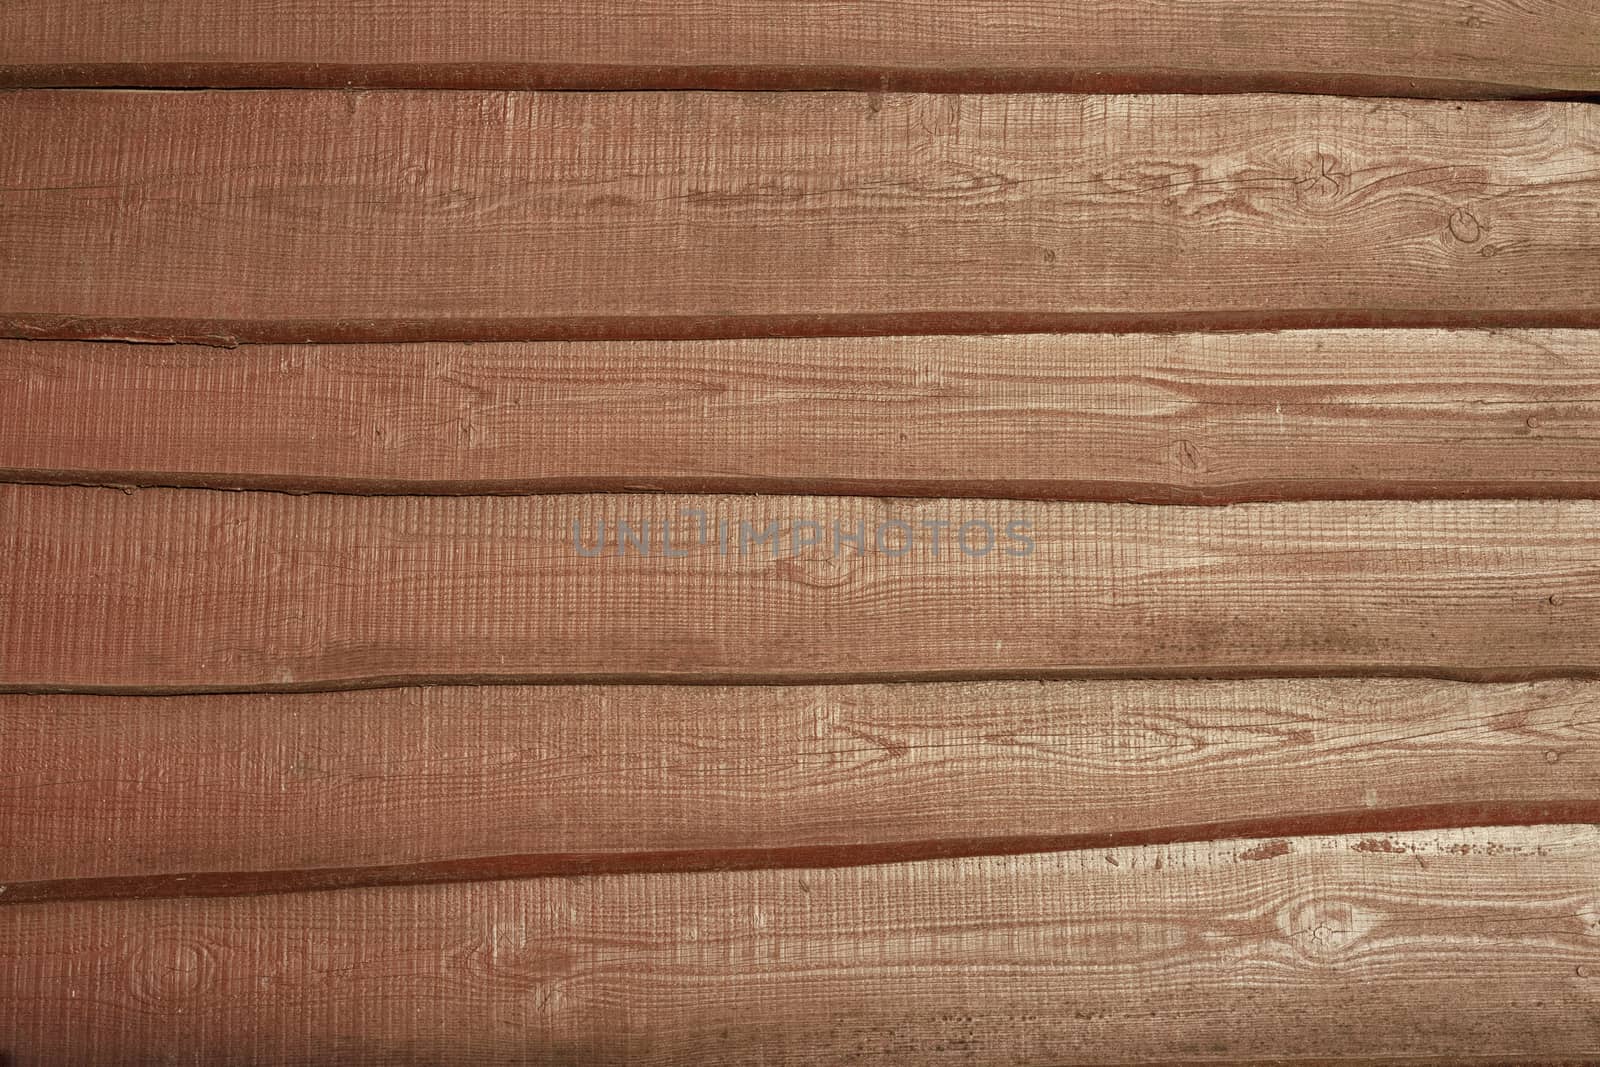 Dark wooden texture. Wood brown texture. Background retro wooden by Tjeerdkruse